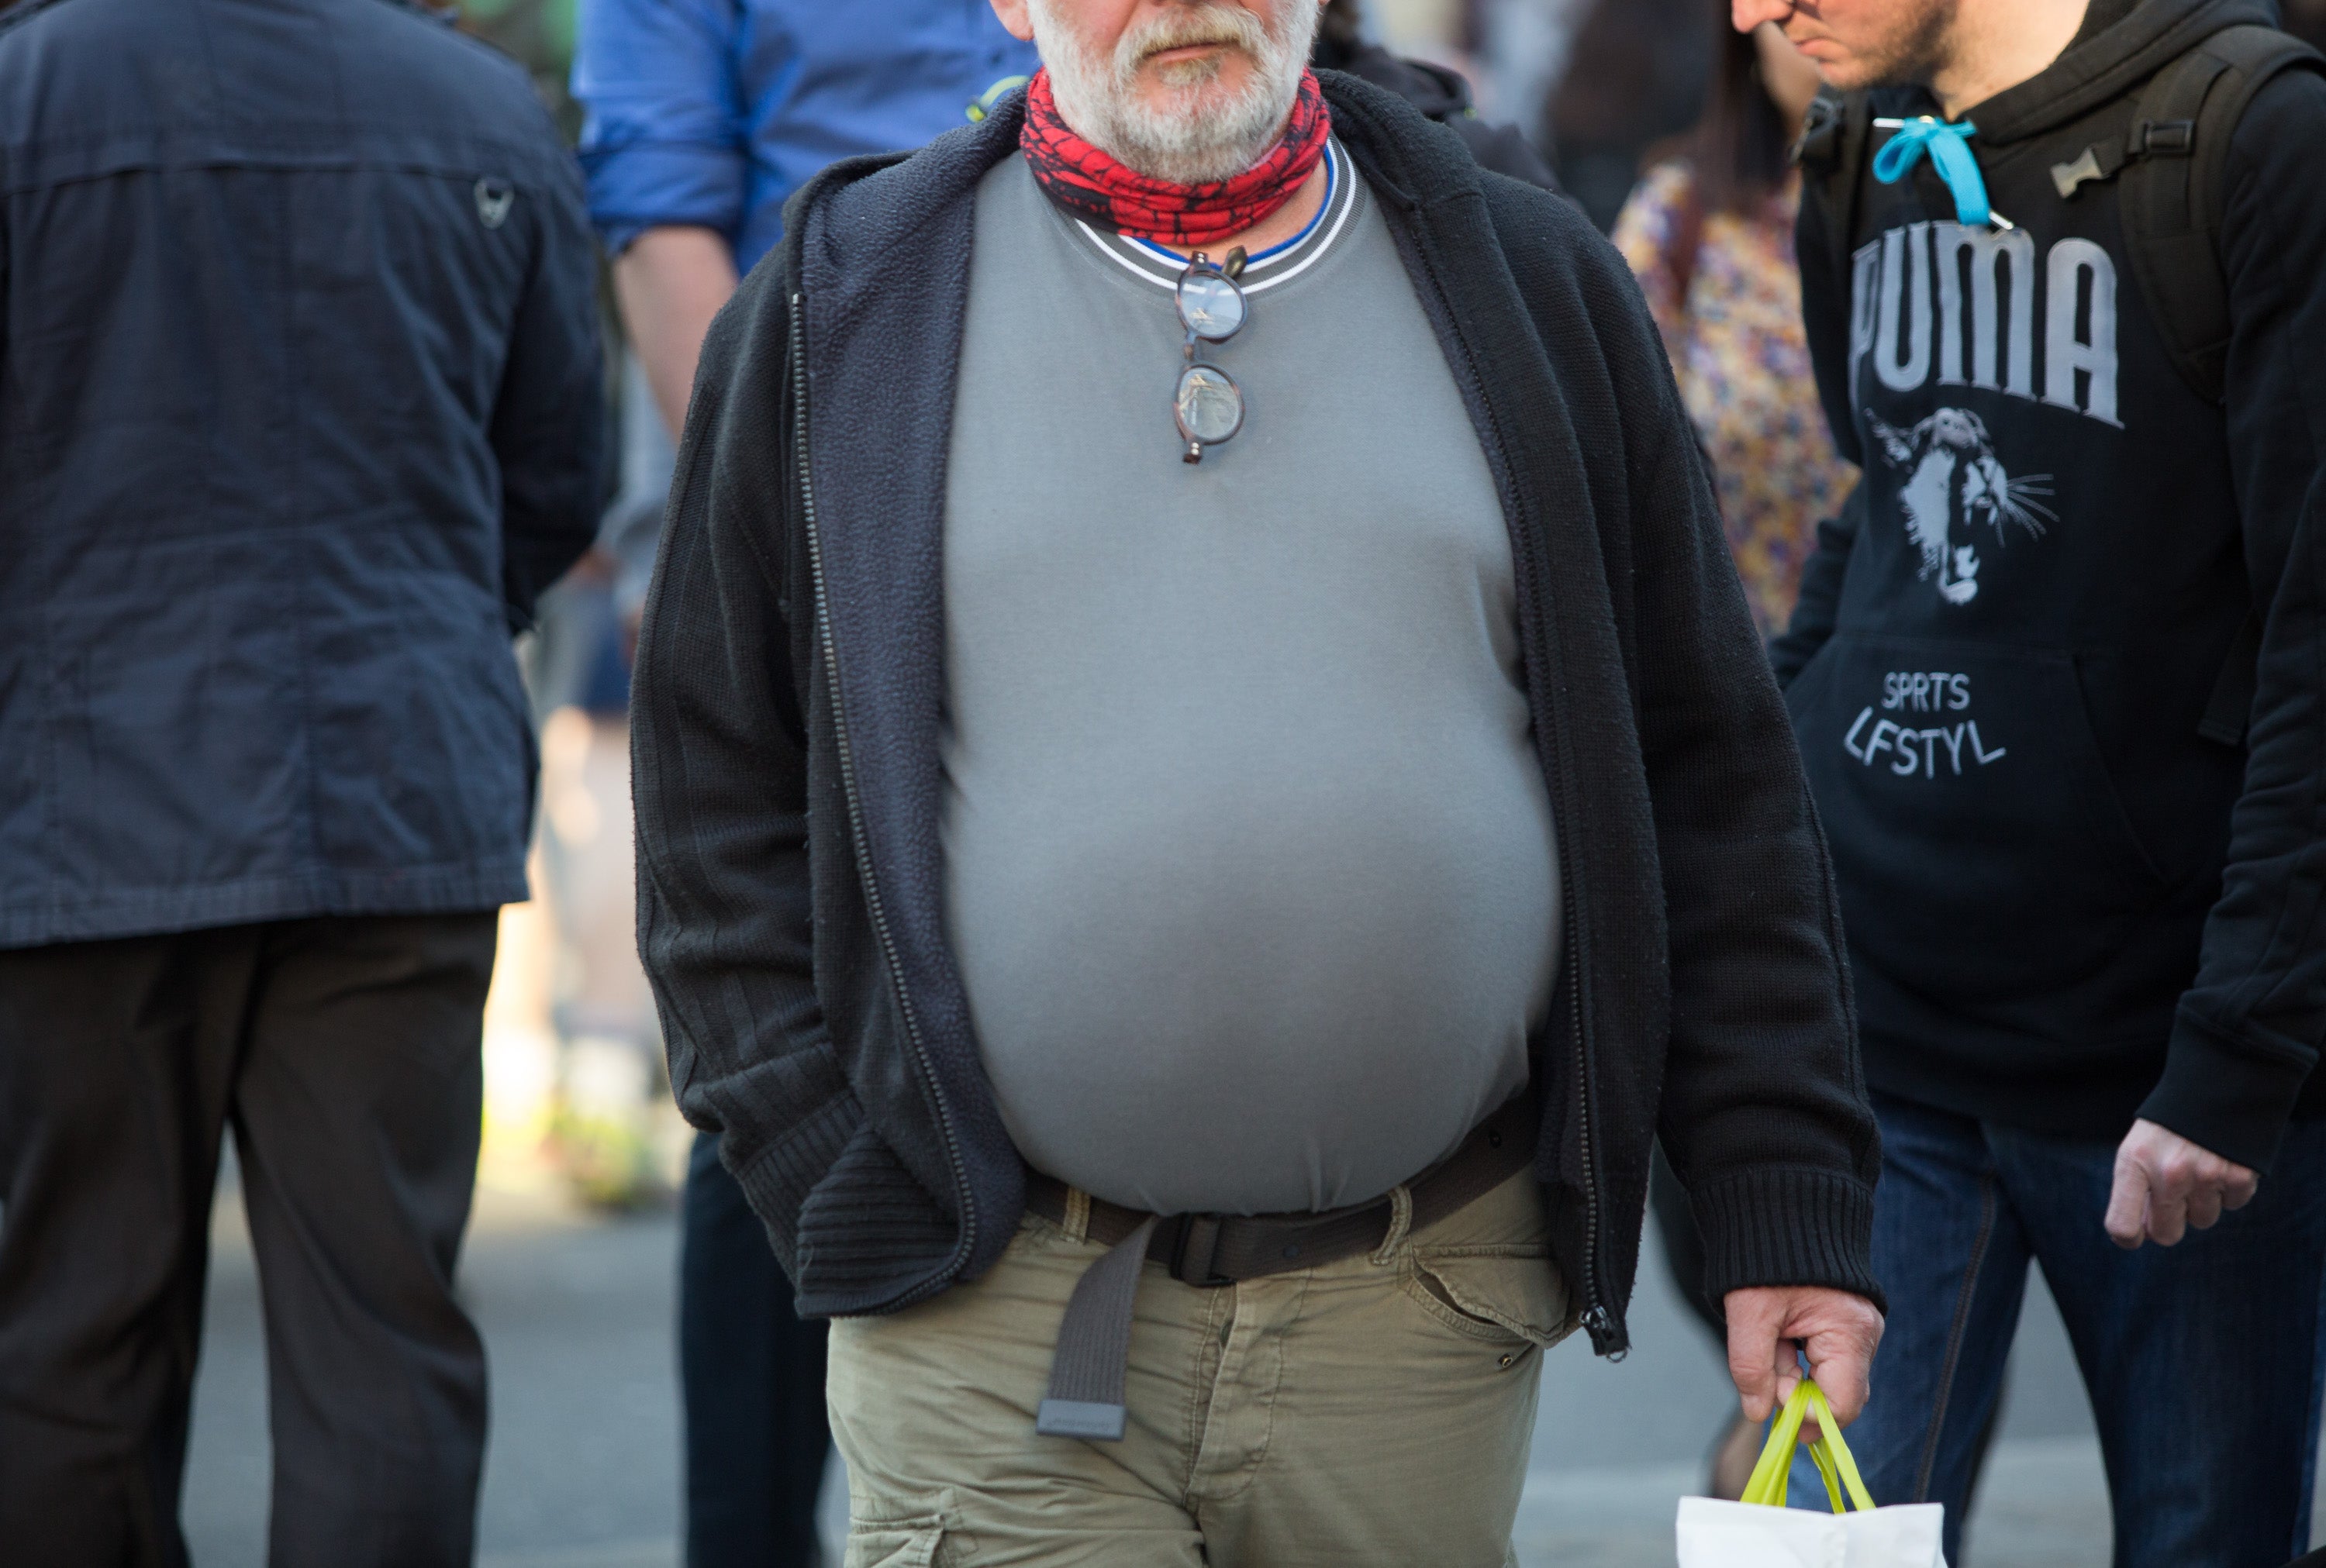 Overweight man walks down street